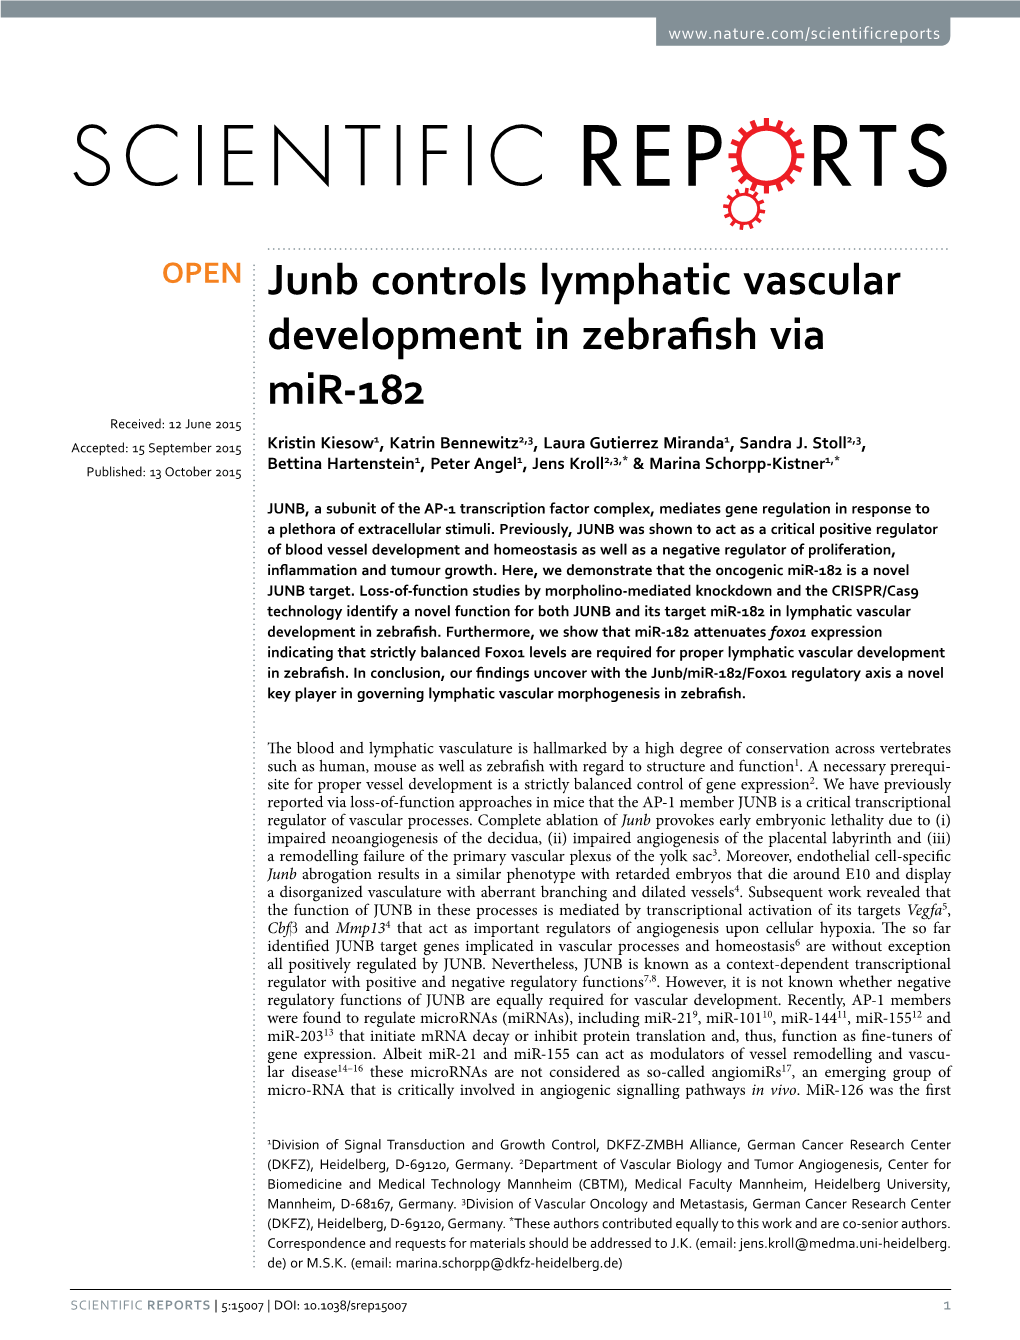 Junb Controls Lymphatic Vascular Development in Zebrafish Via Mir-182